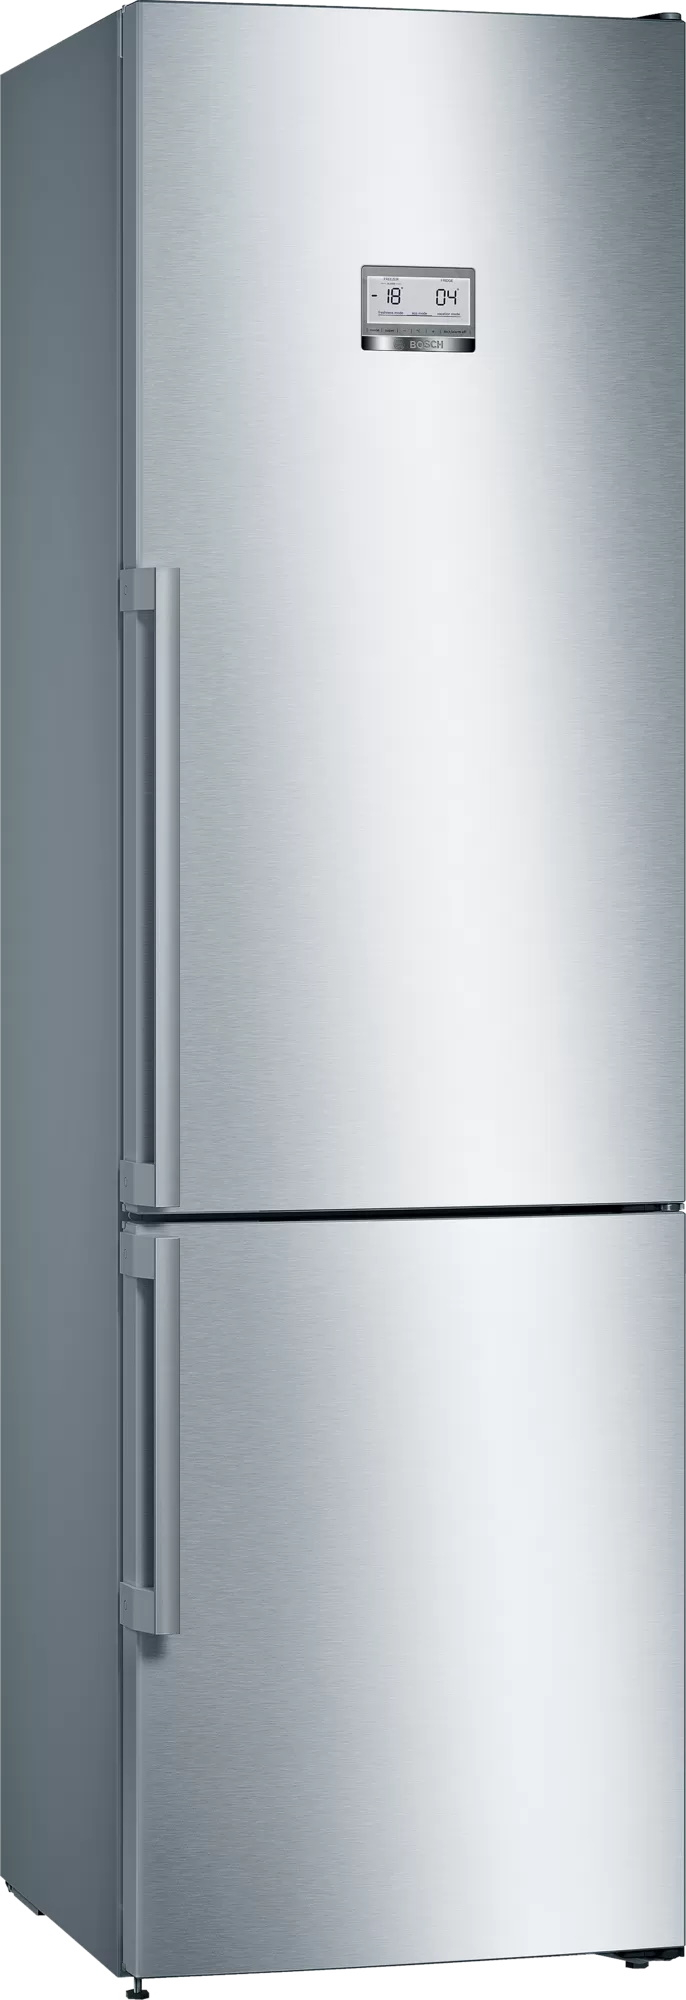 Combina frigorifica Bosch KGN39AIEQ Serie 6 NoFrost 366 litri net Clasa A++ WiFi Ready usi Inox easyClean